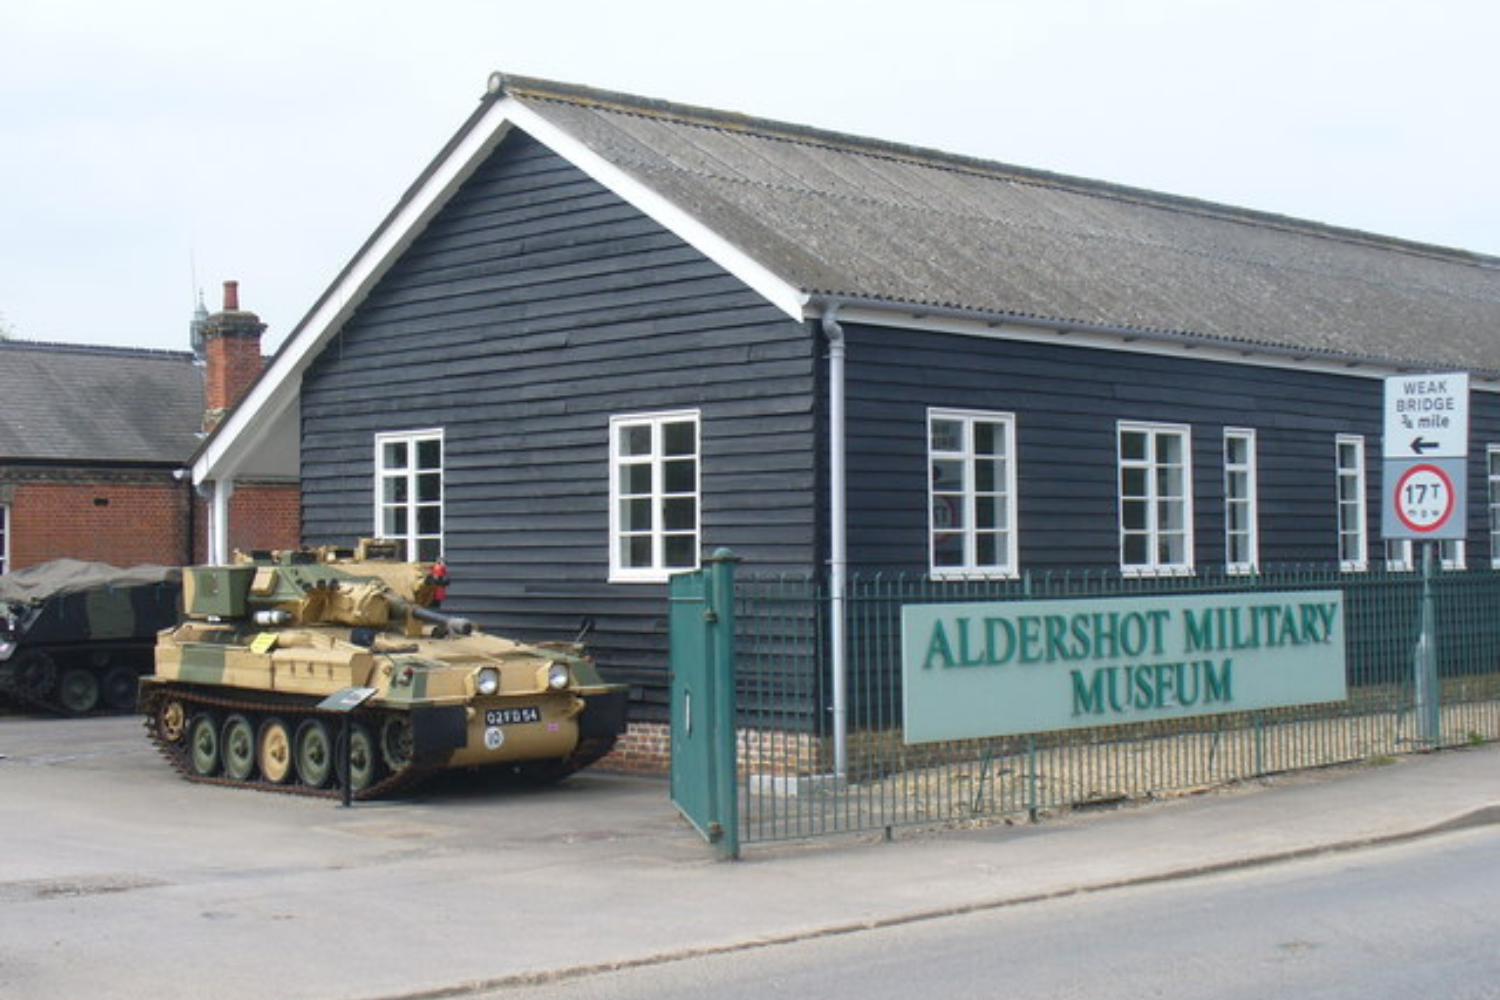 Aldershot Military Museum turns 40